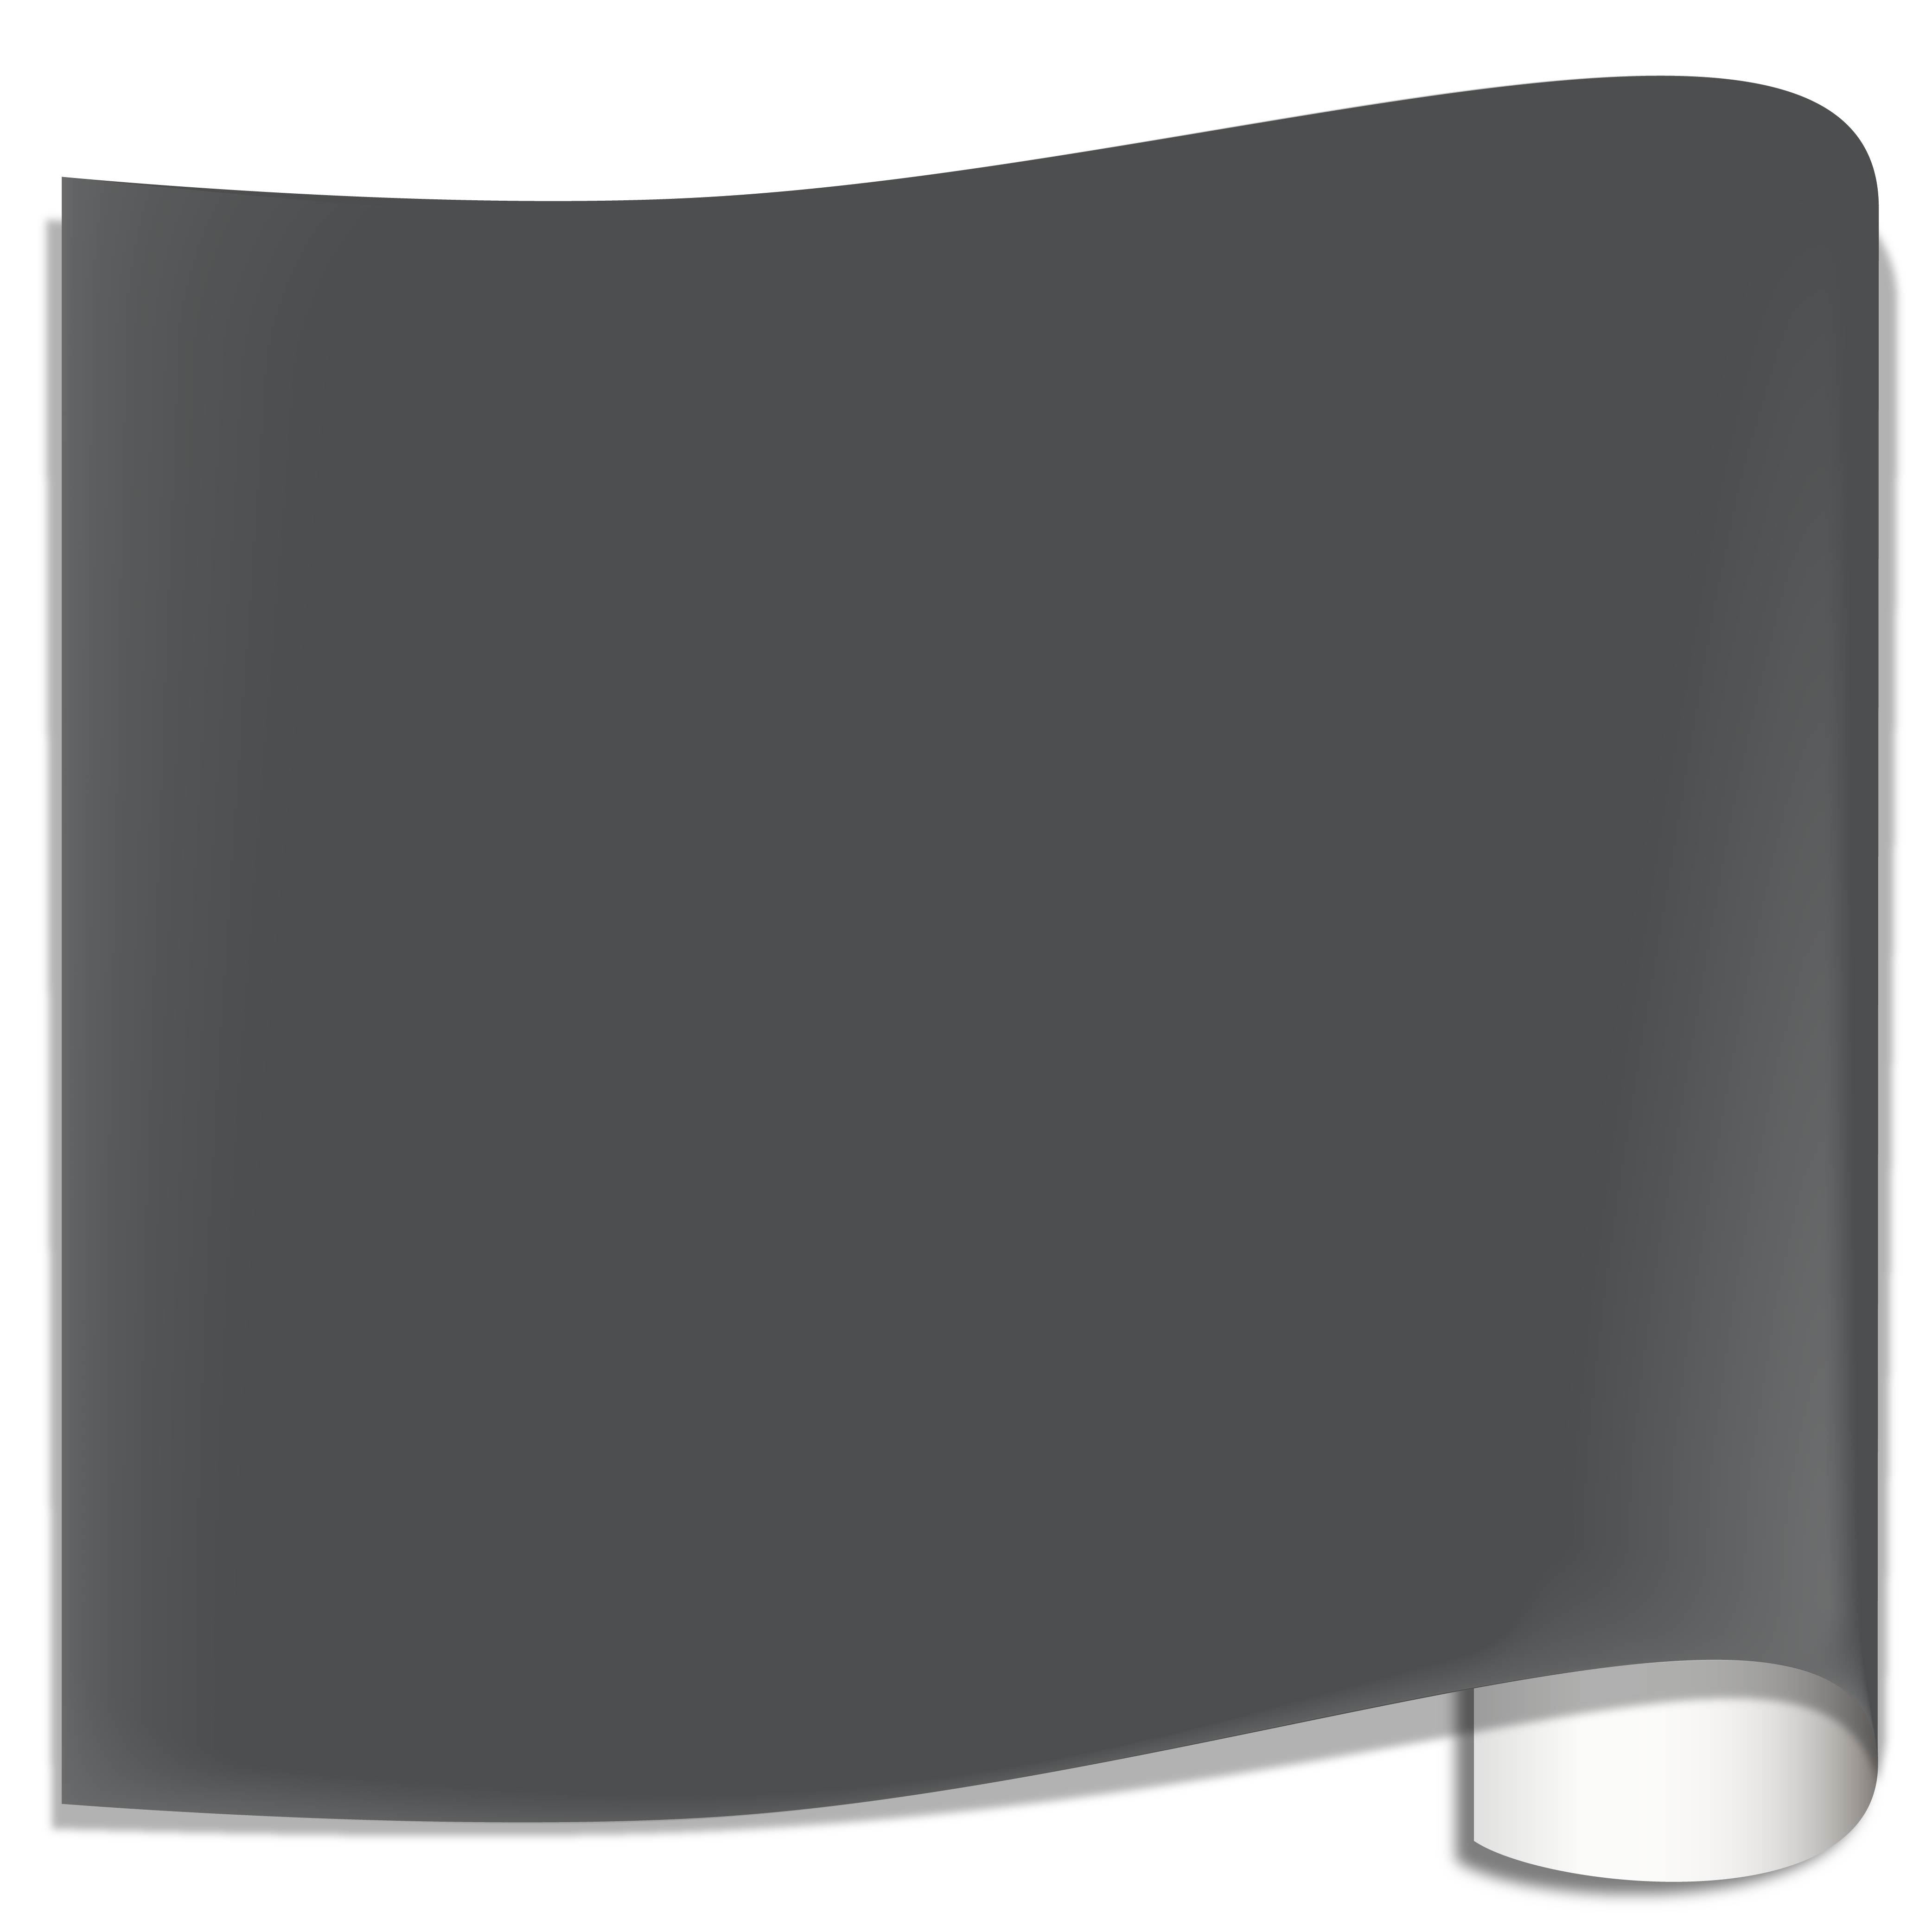 Dark grey transparent vinyl